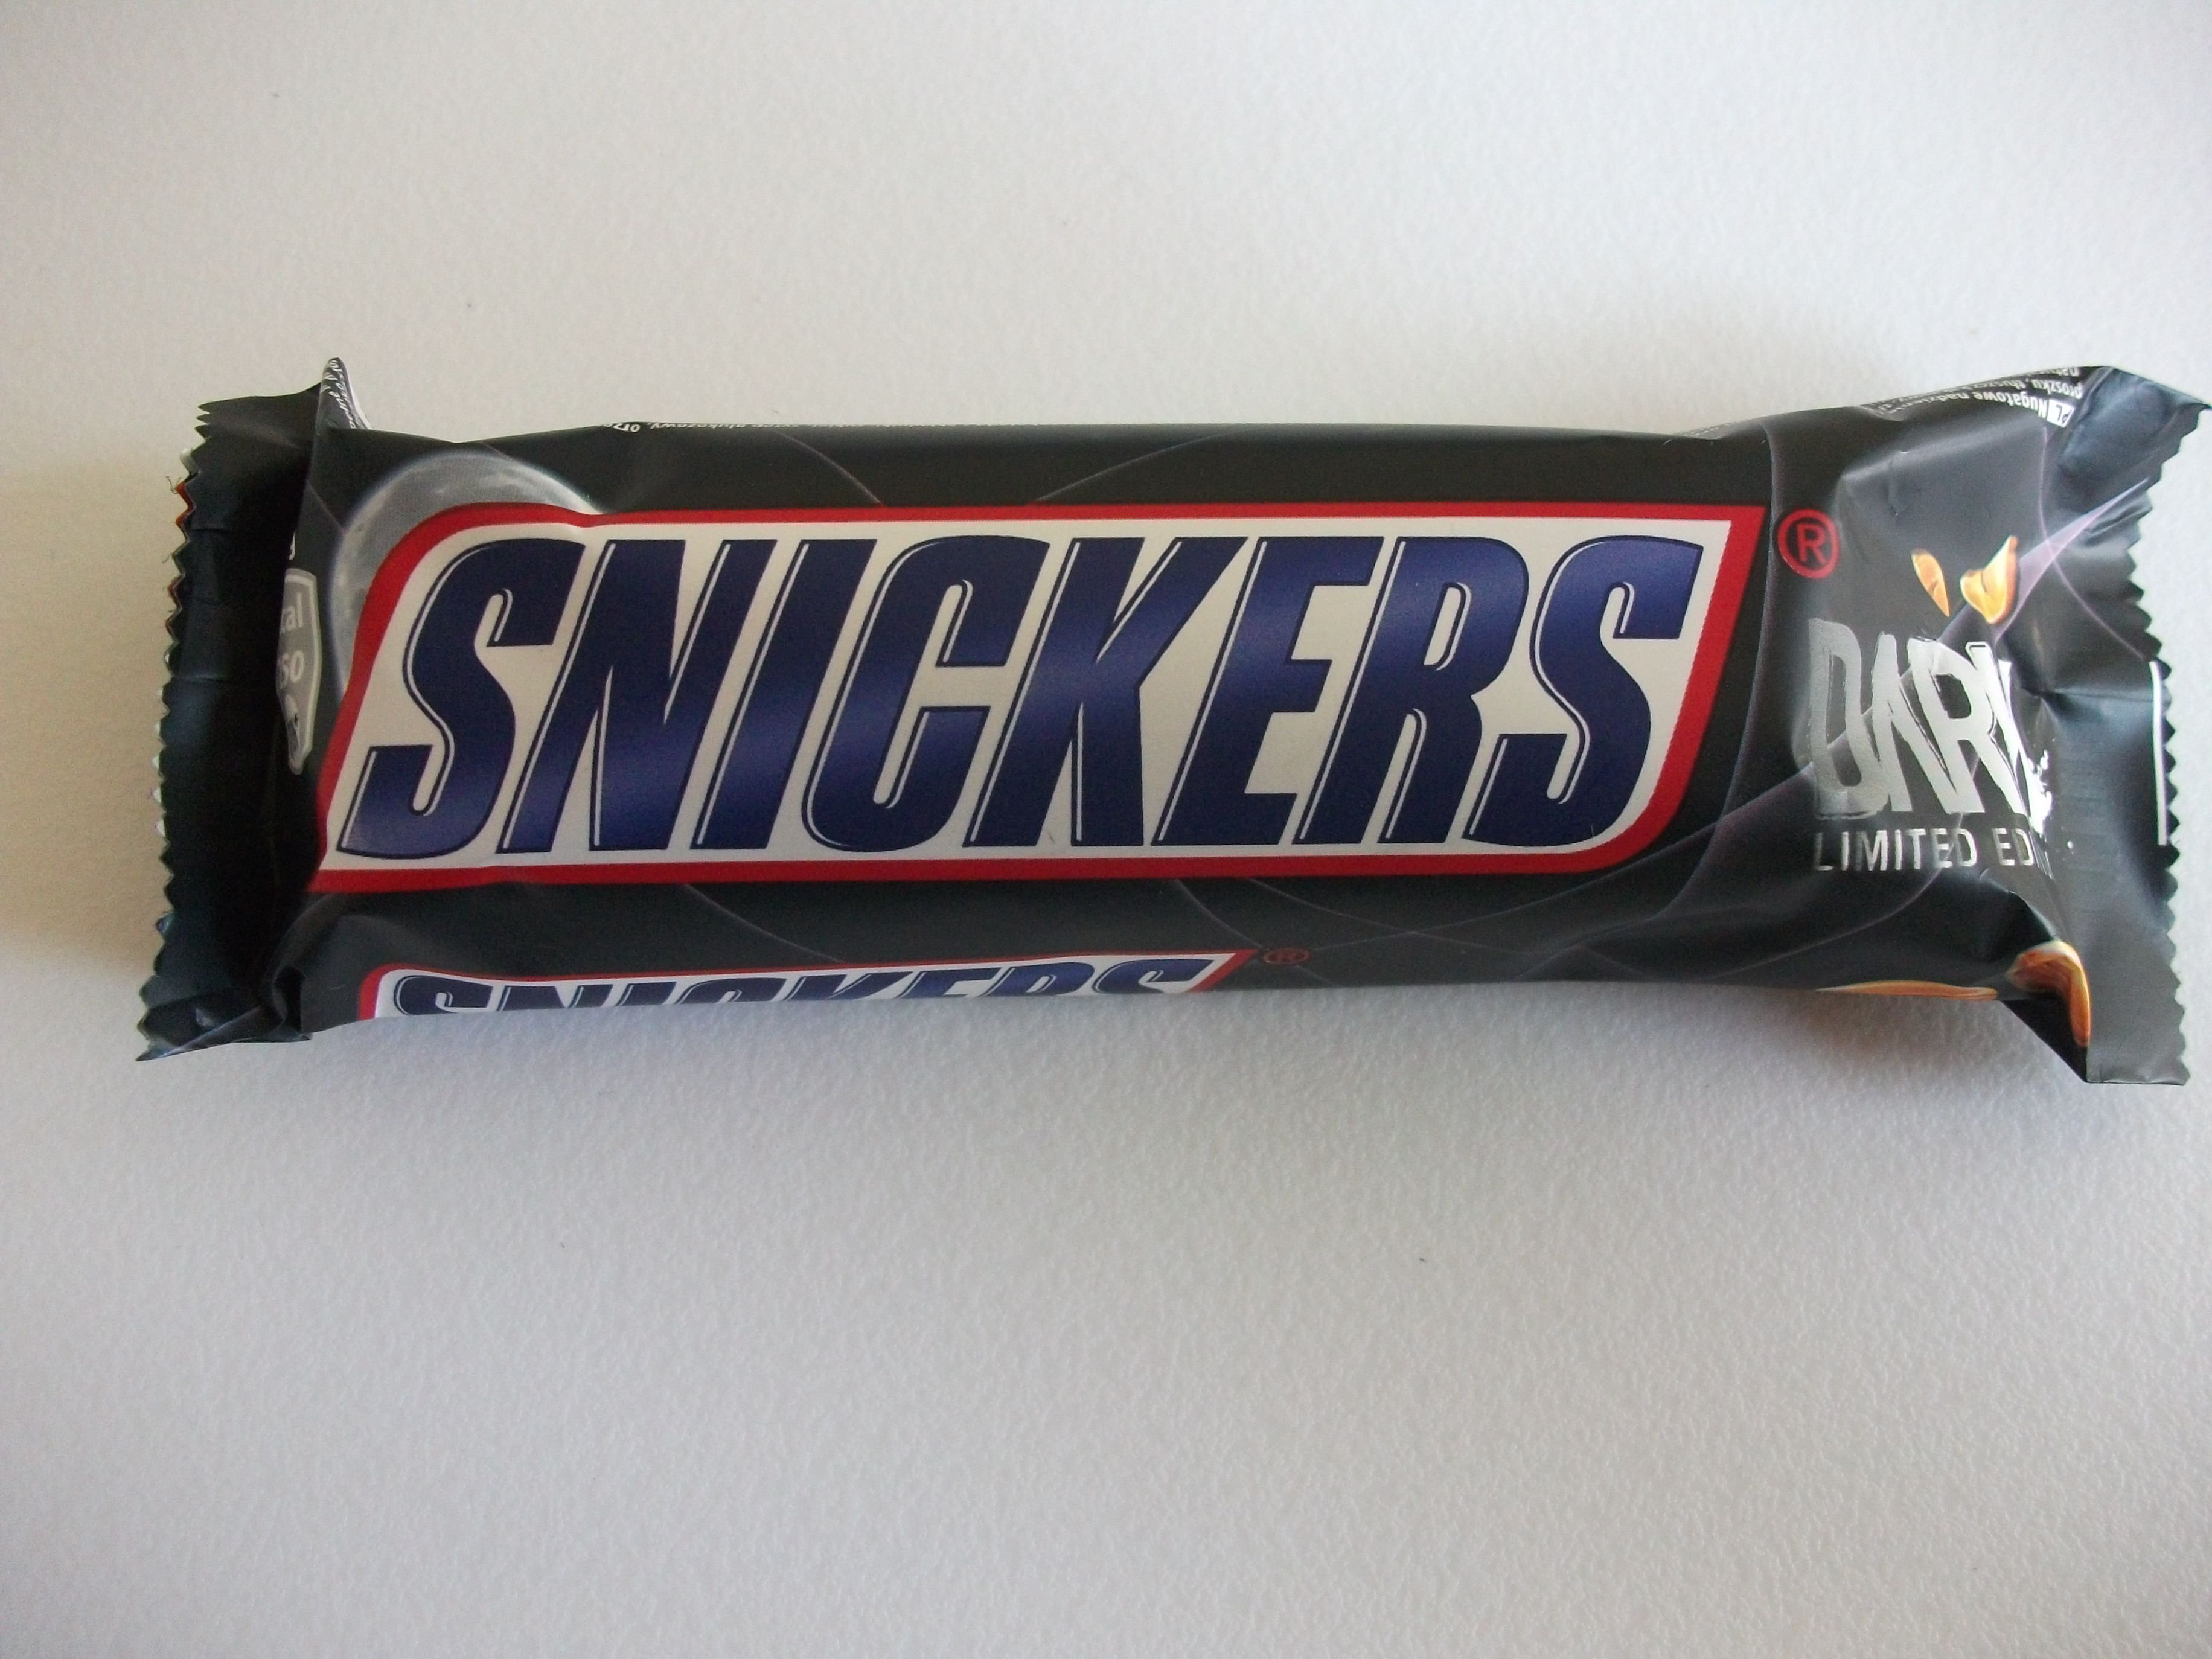 Dark limited. Сникерс Limited Edition. Шоколад Сникерс дарк. Сникерс темный шоколад. Сникерс Сникерс шоколад.